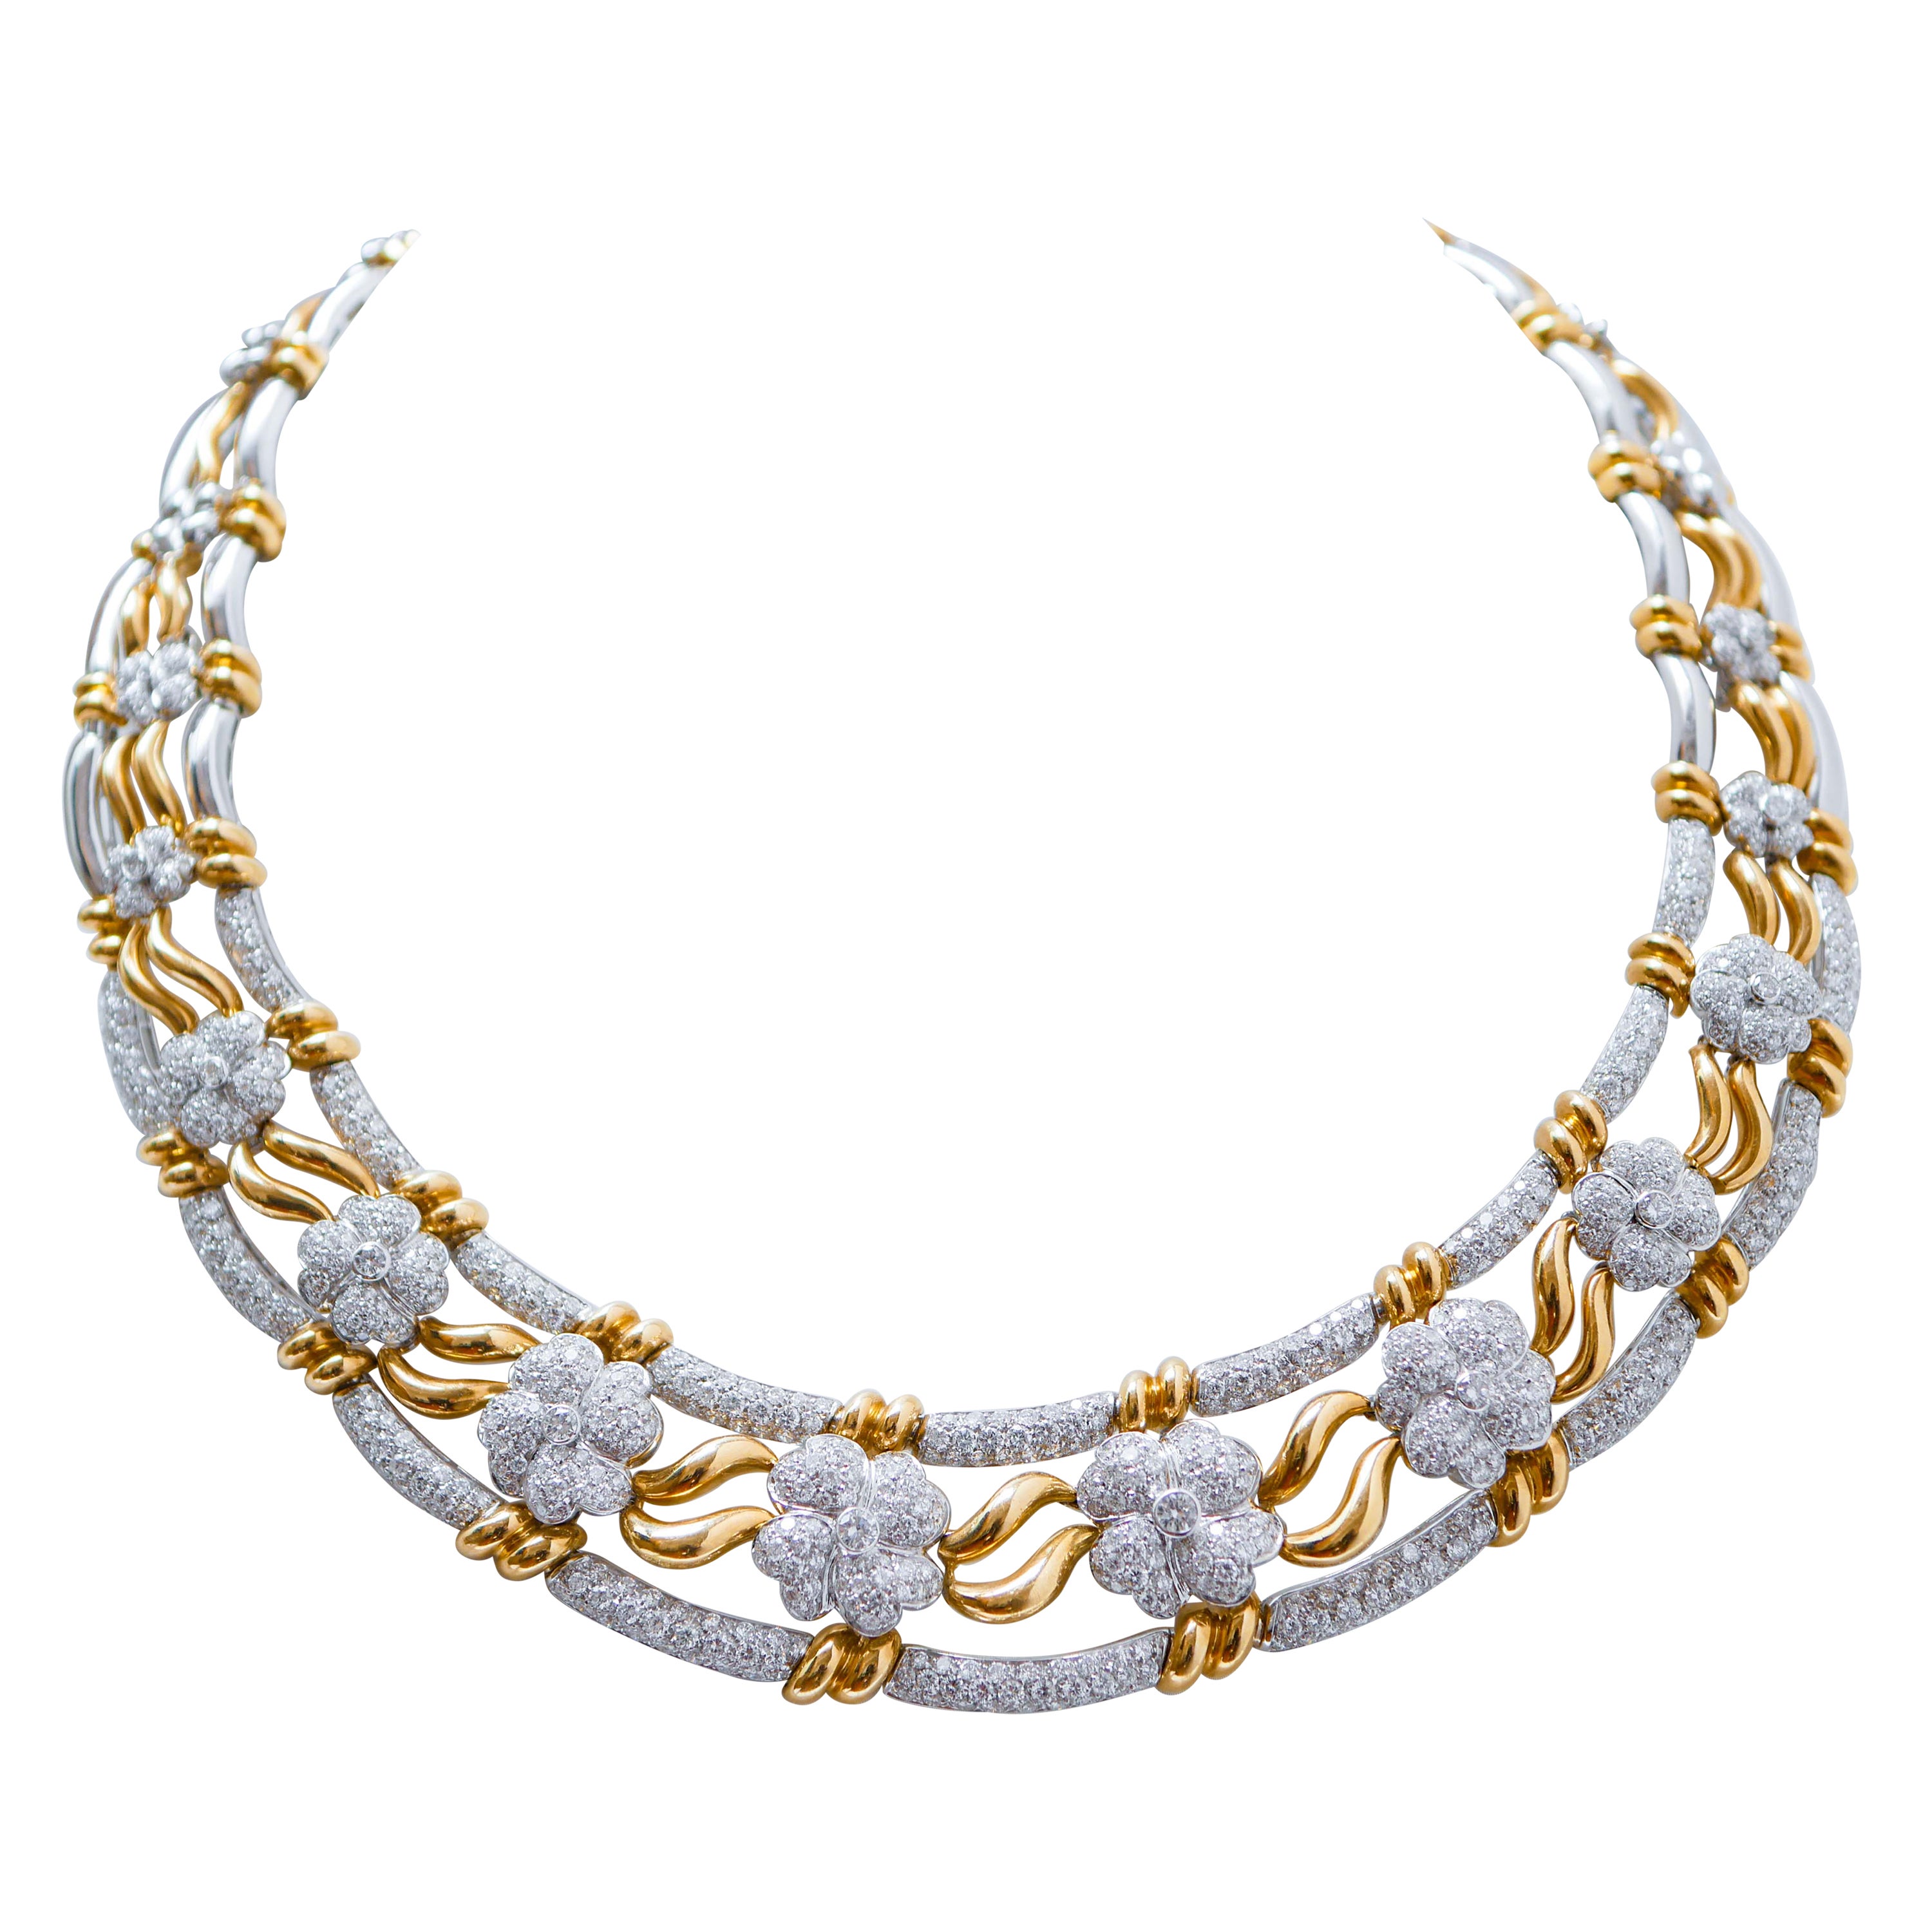 Diamonds, 18 Karat Yellow Gold and White Gold Necklace.